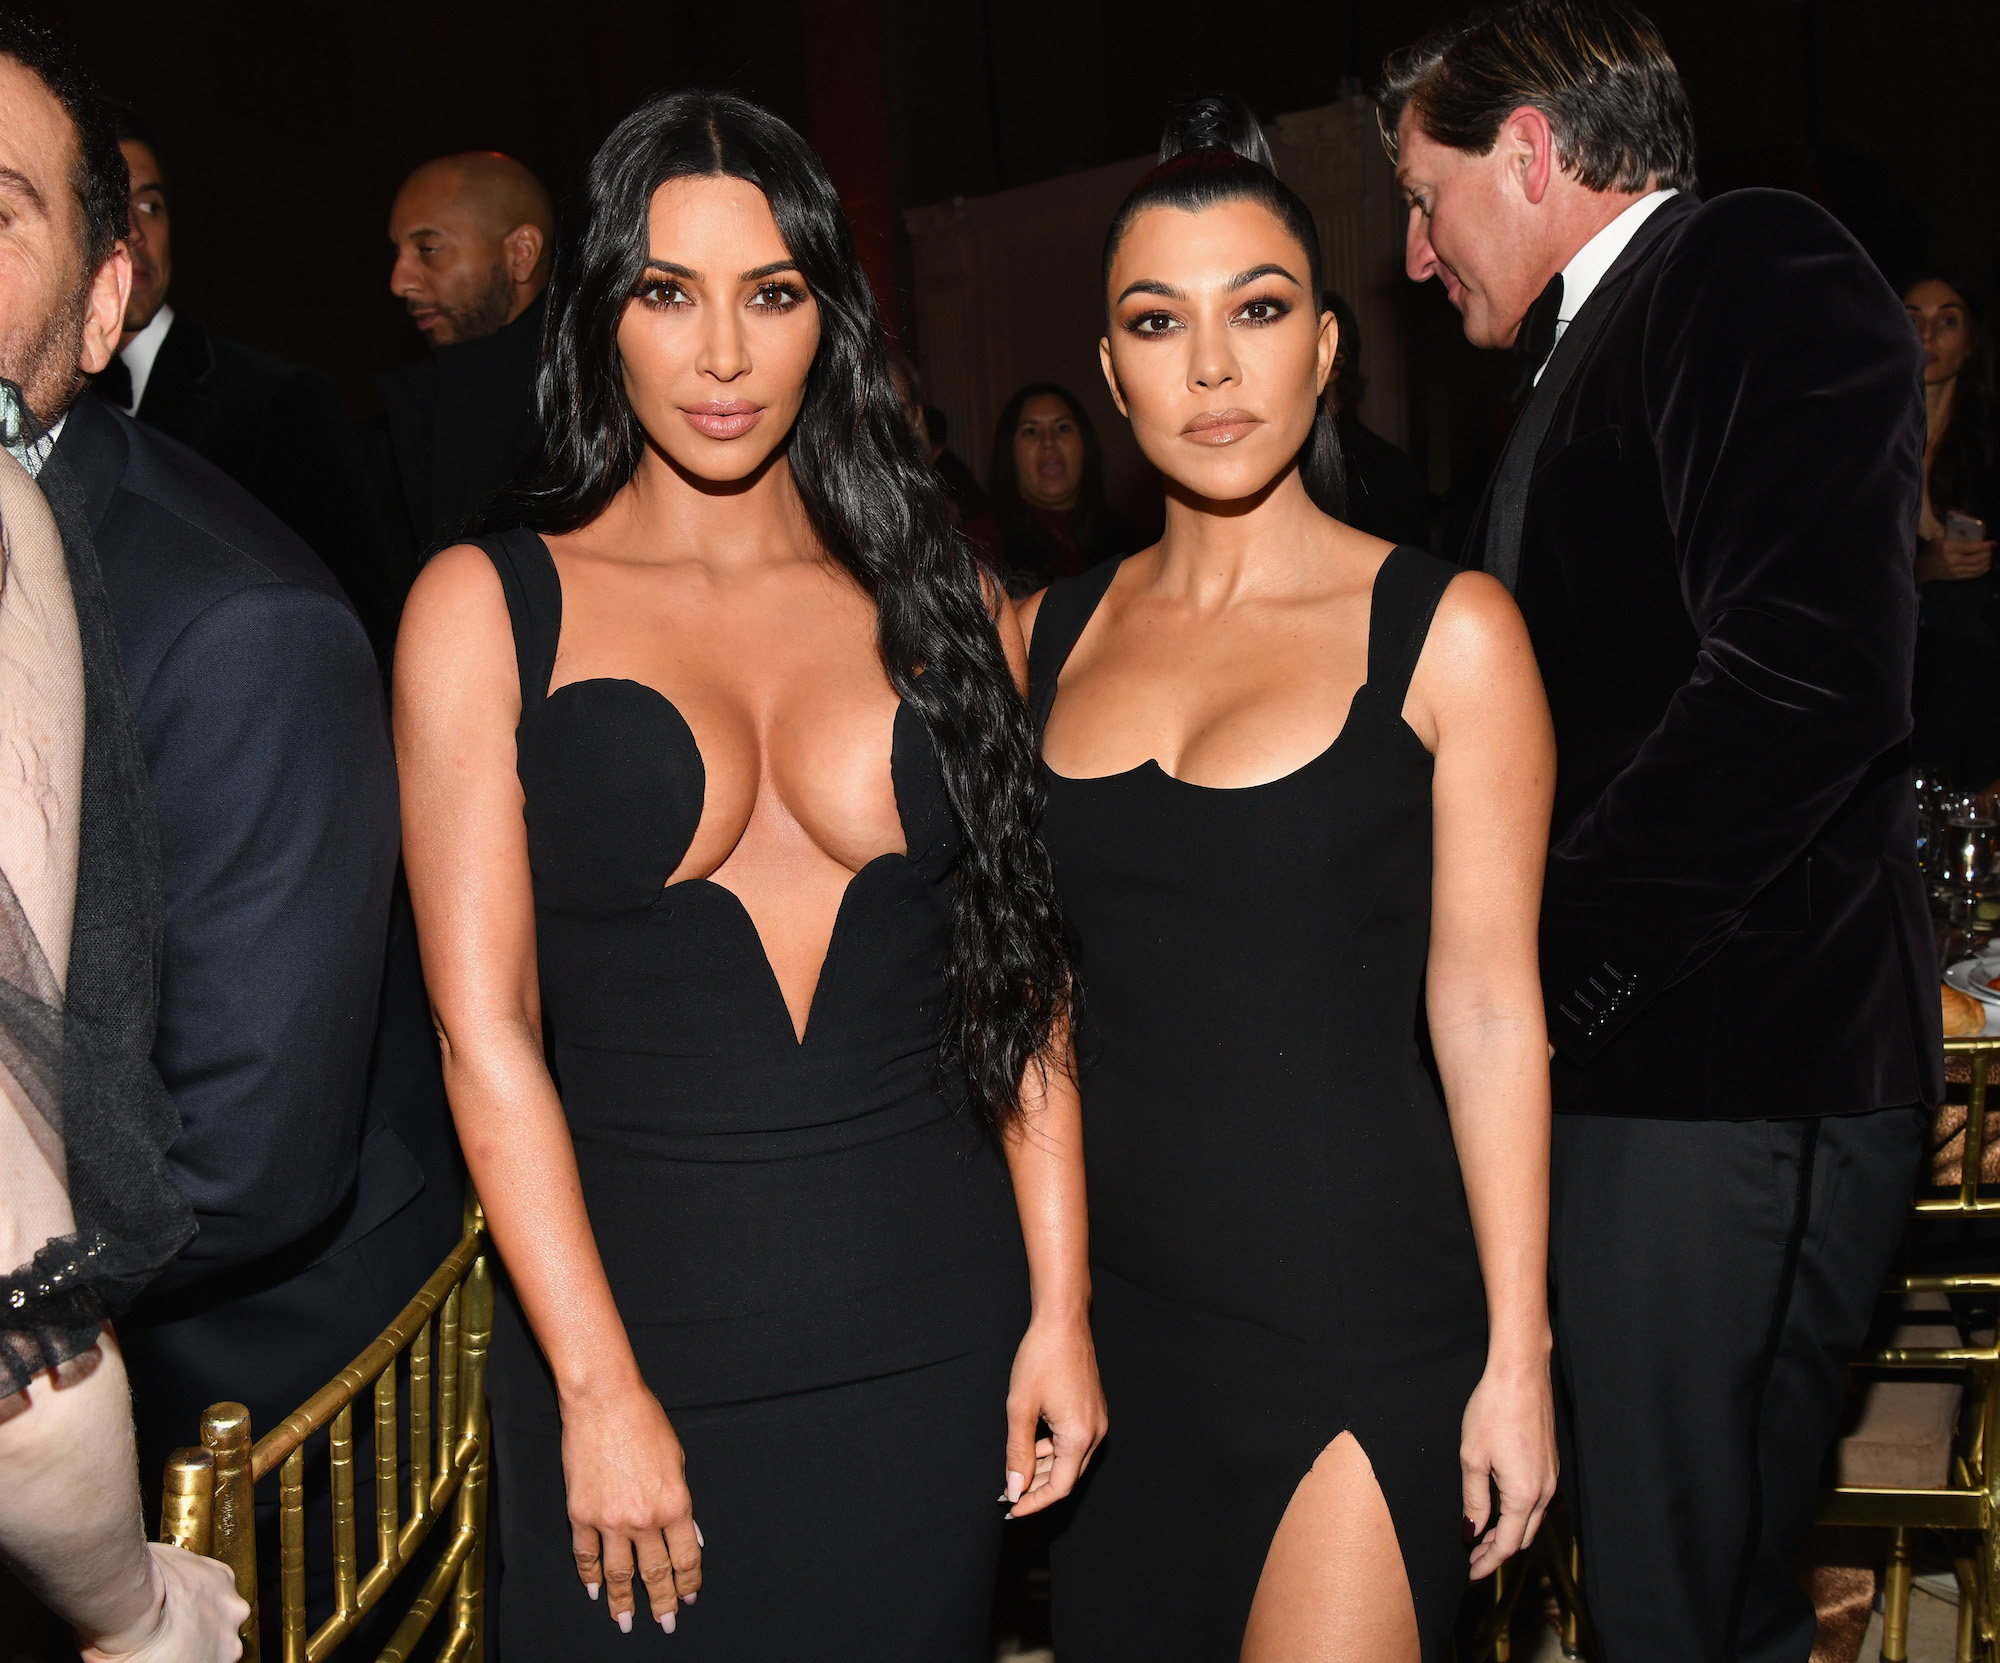 Kim Kardashian West and Kourtney Kardashian attending amfAR New York Gala in 2019